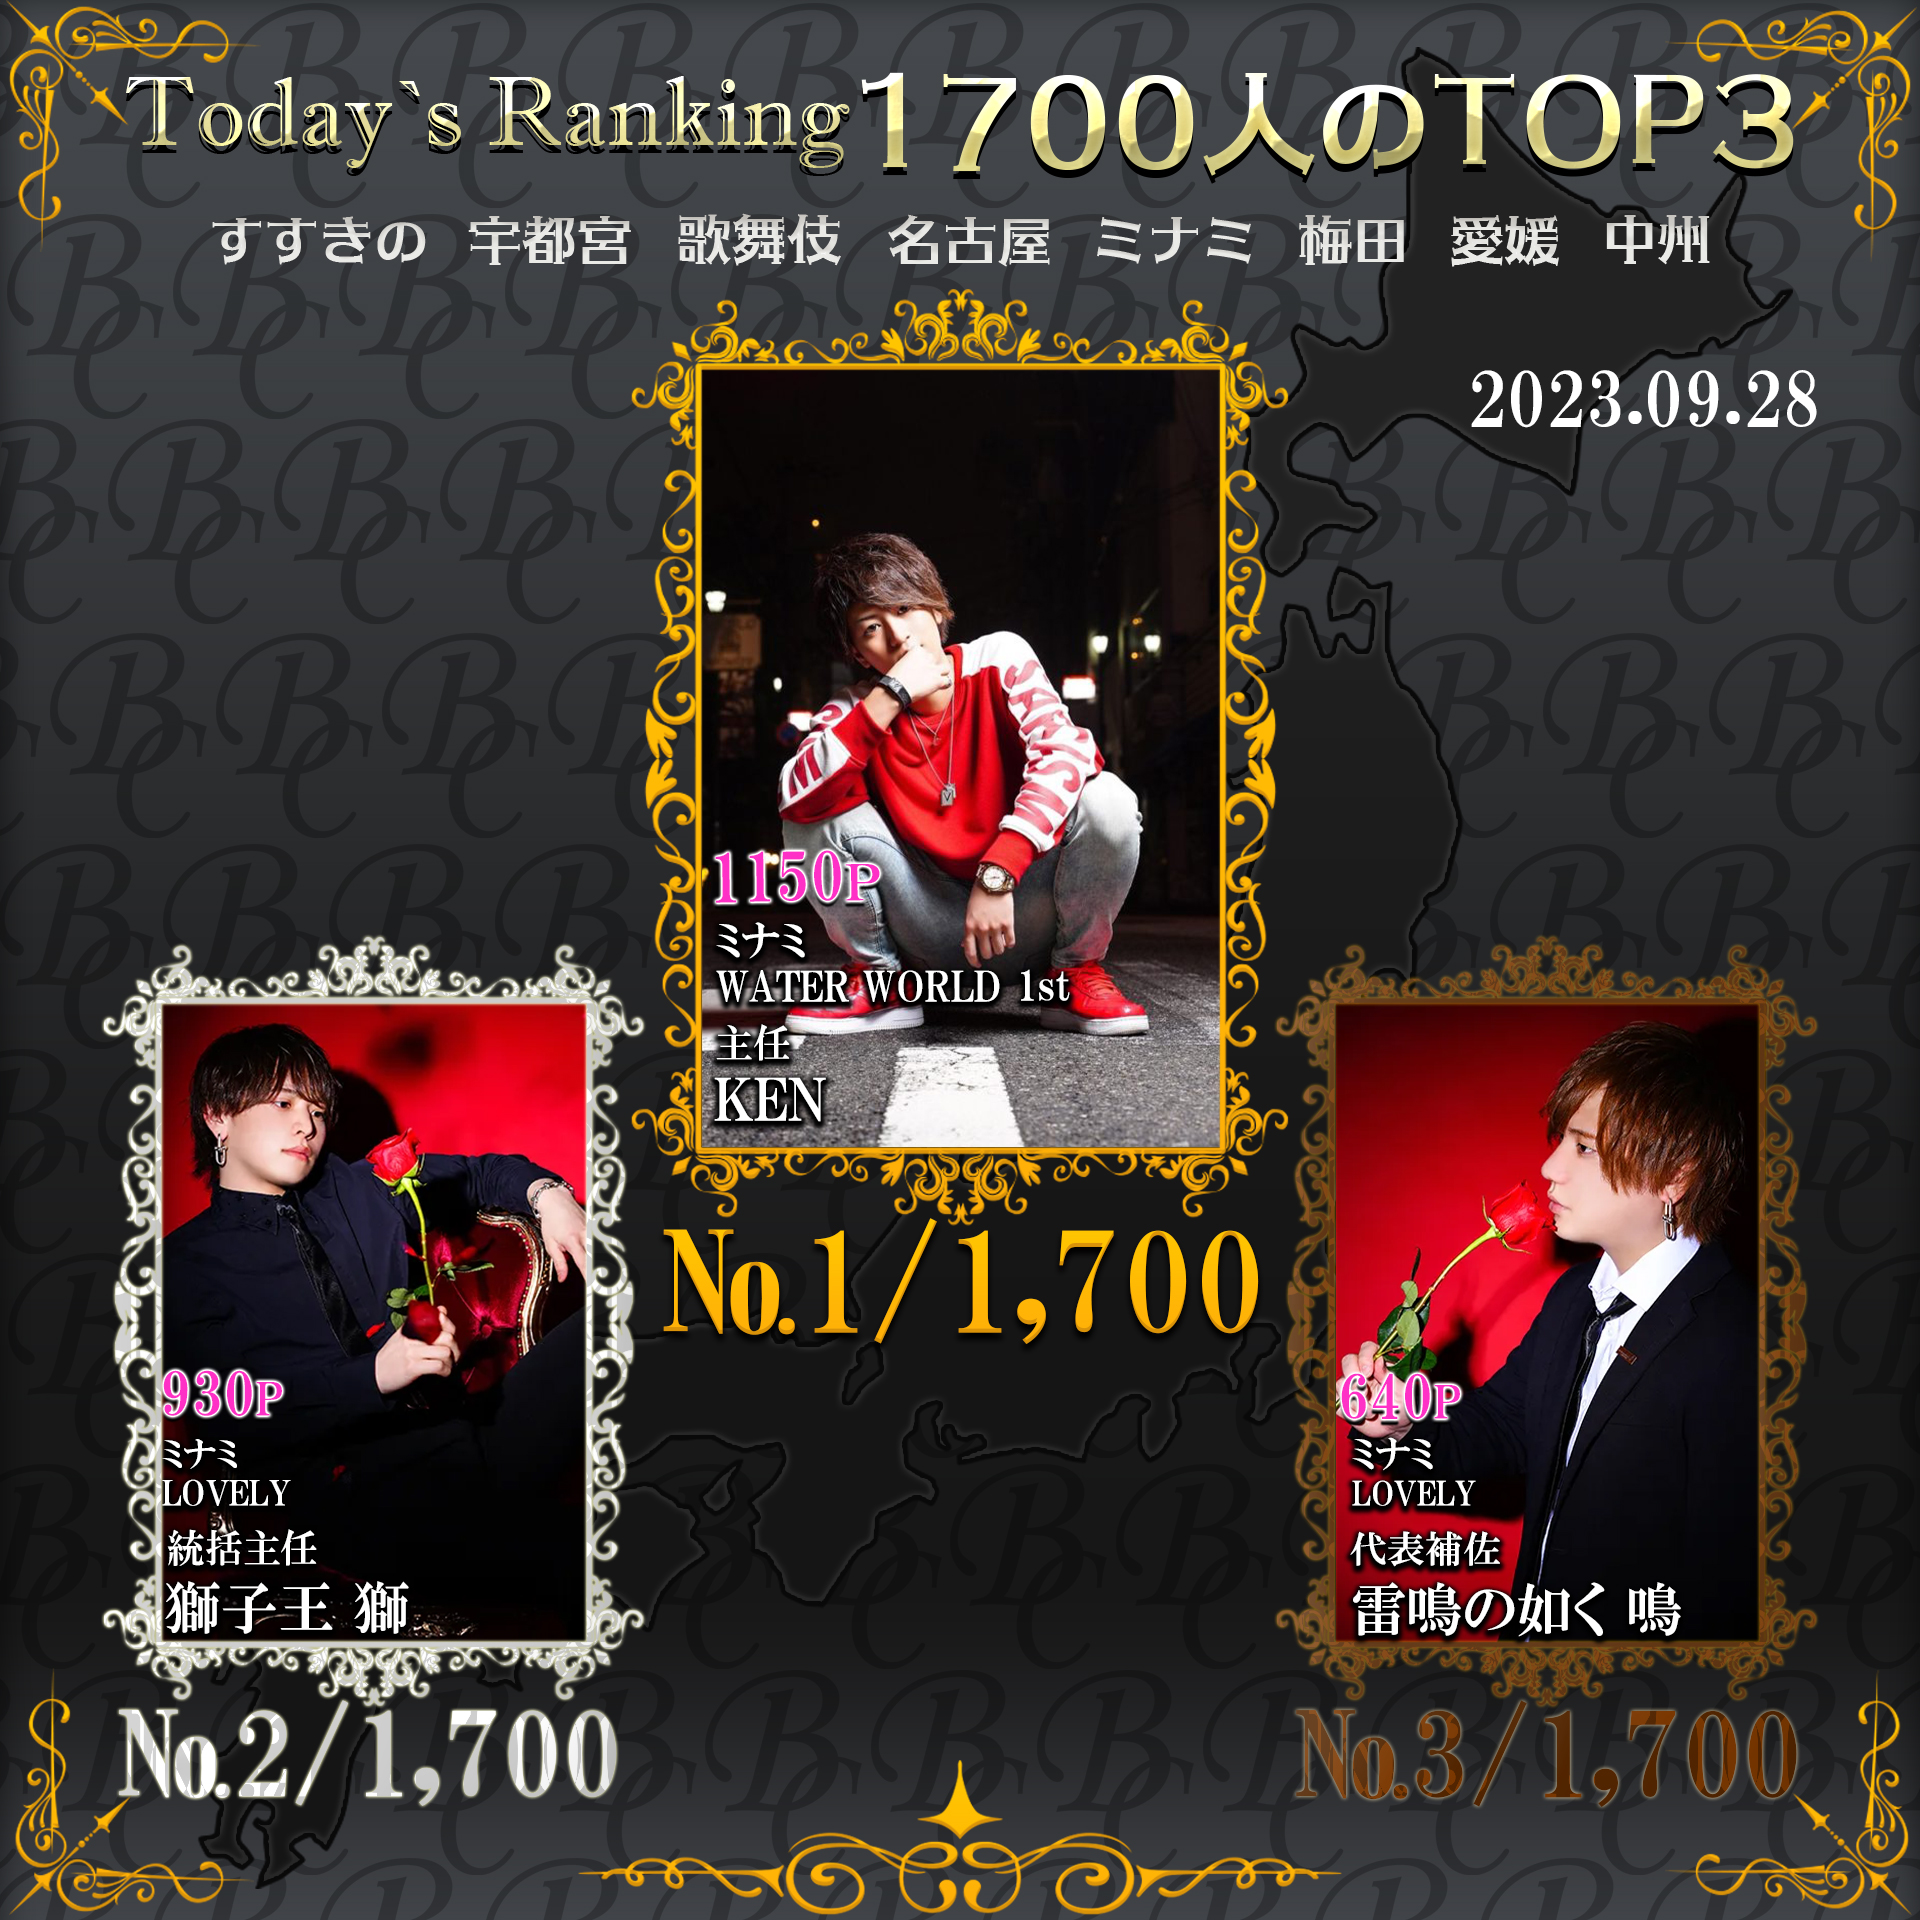 9/28 Today’s Ranking